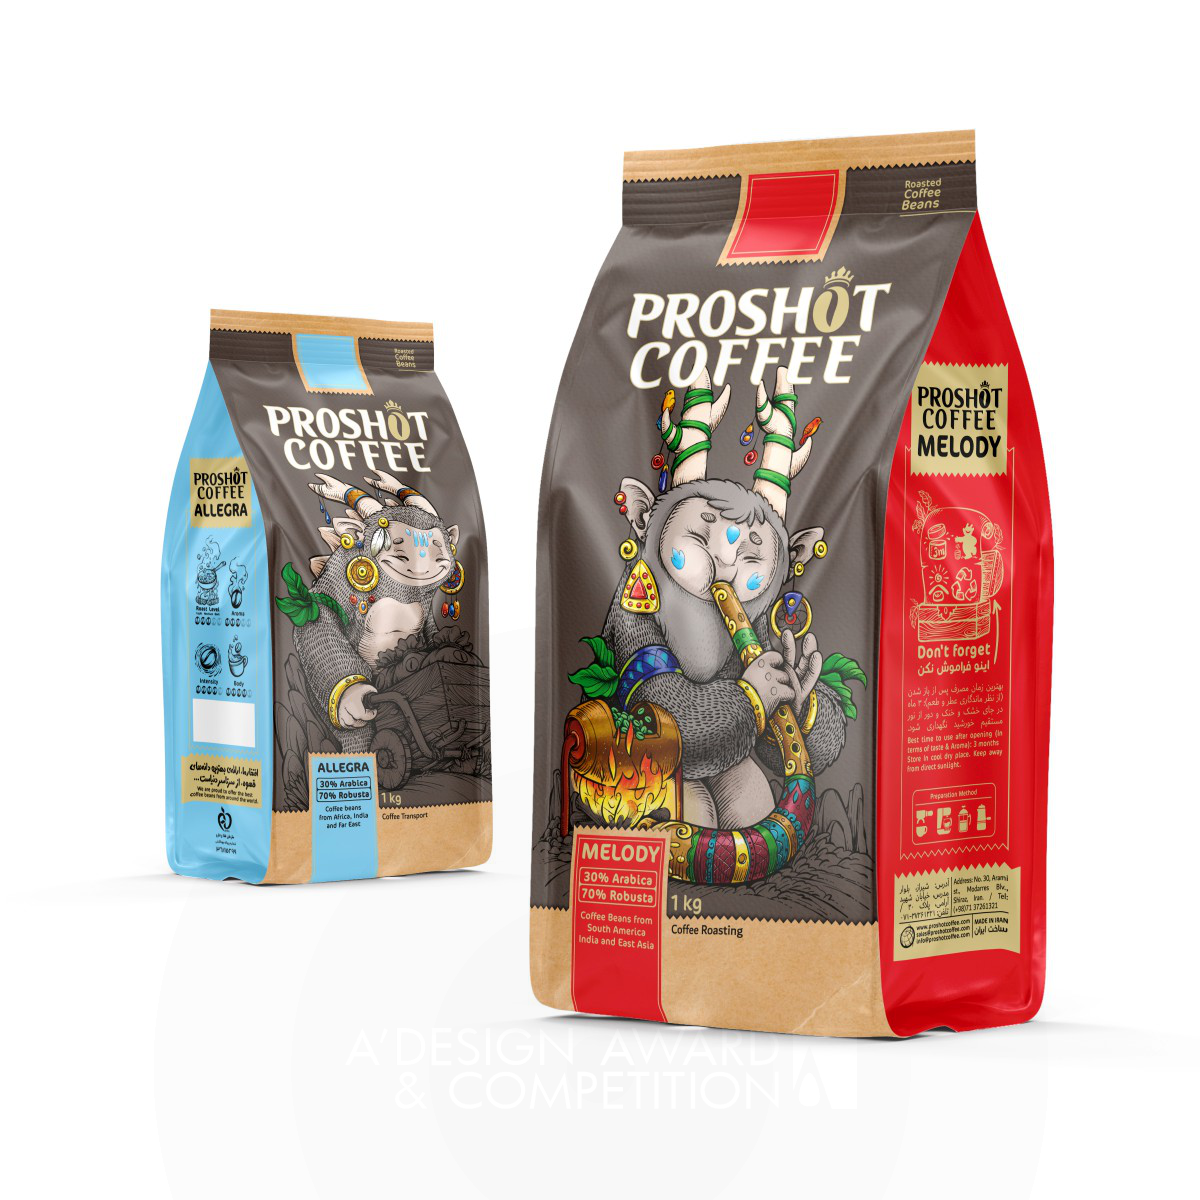 Proshot Coffee